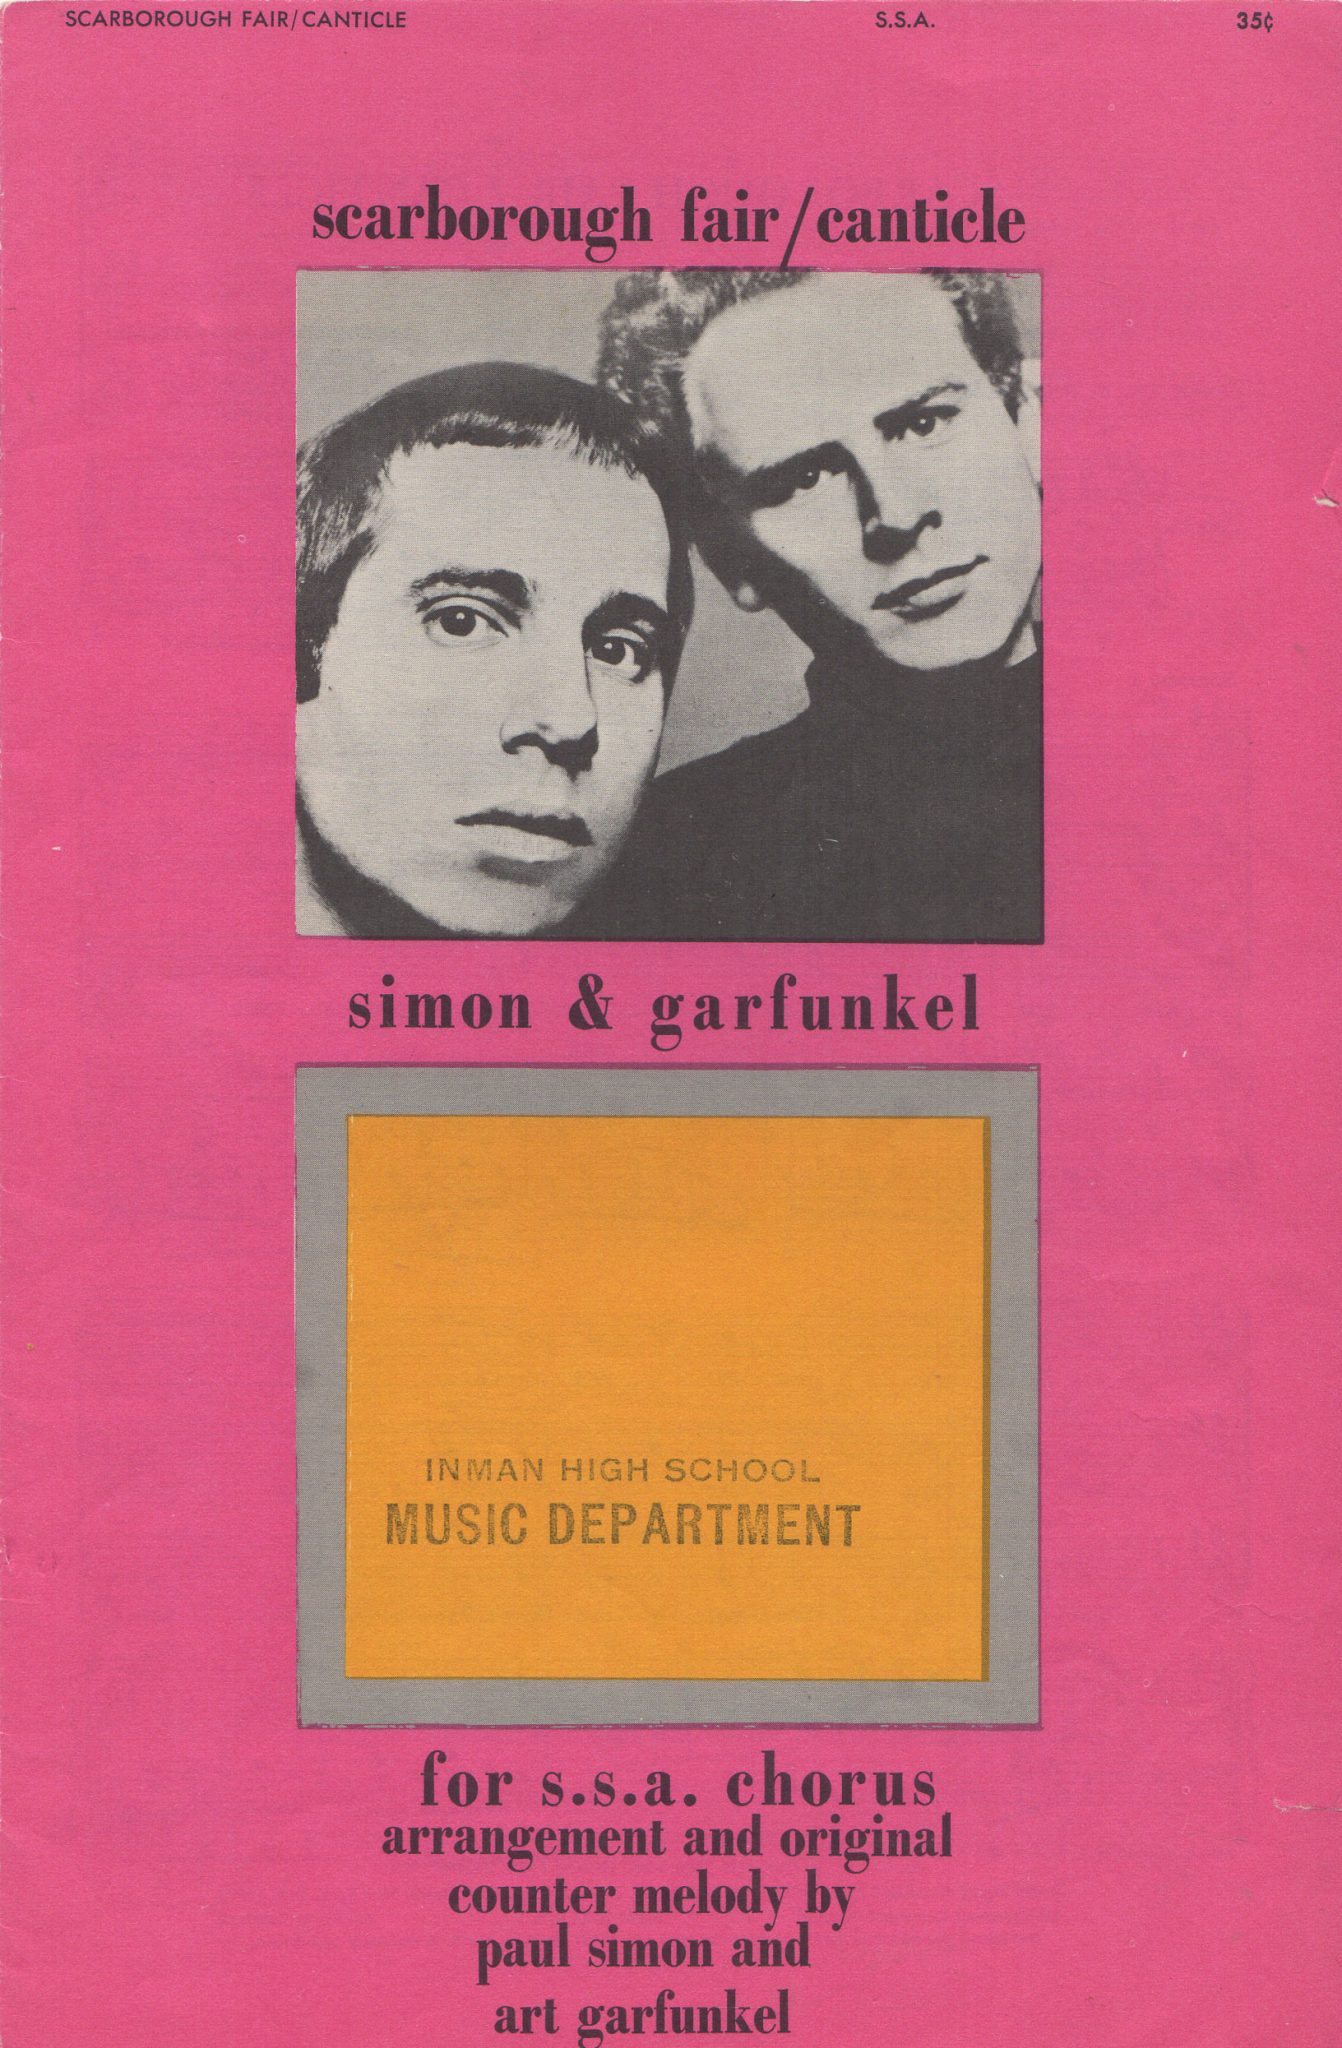 Scarborough Fair - Simon & Garfunkel - Karaoke 